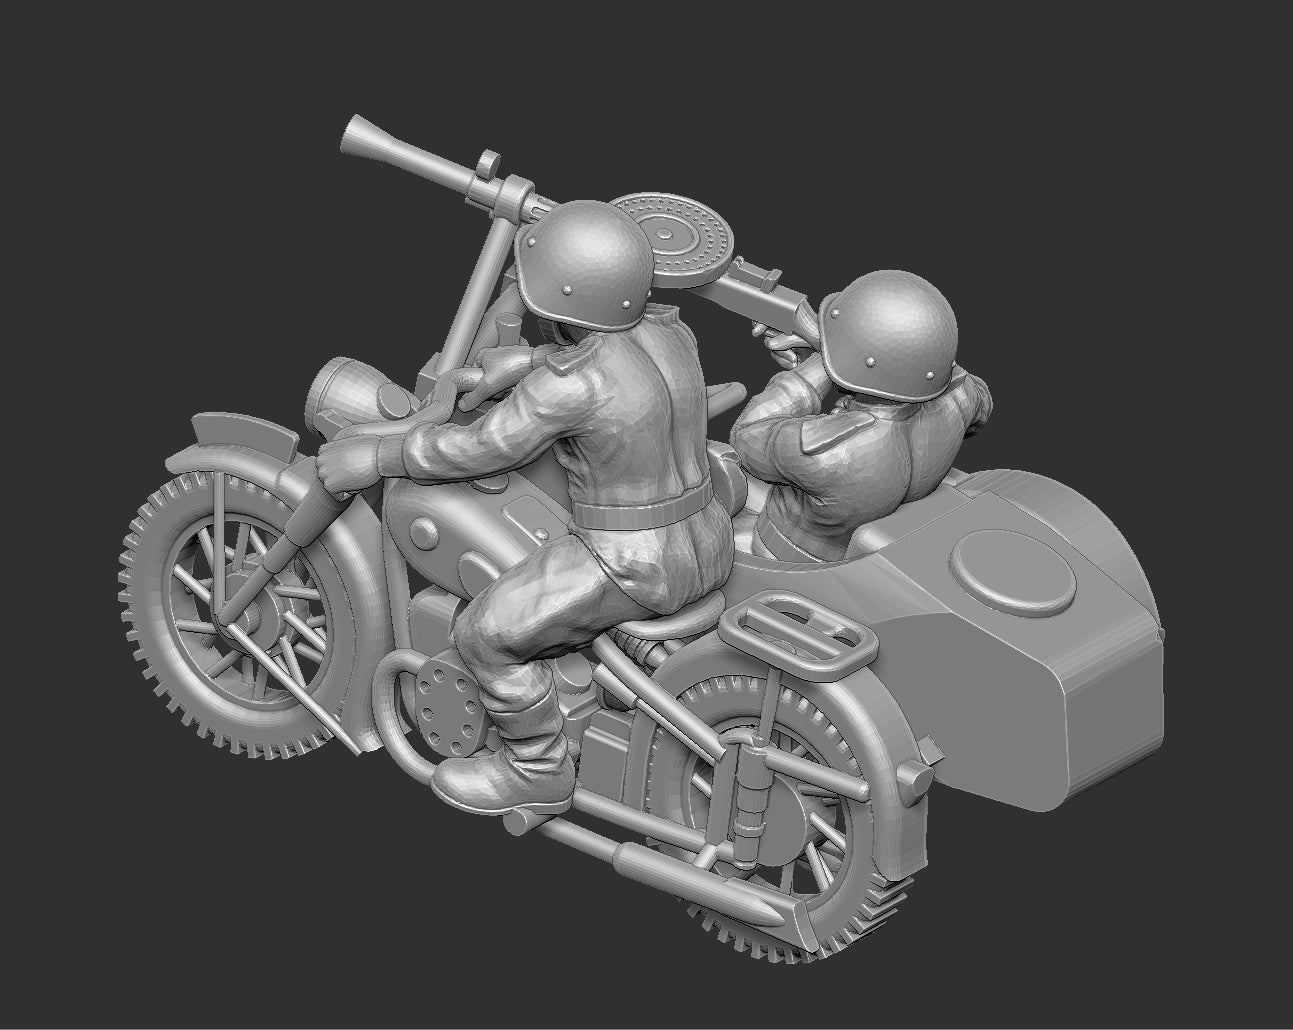 Soviet Motorcycle 4 PTRD